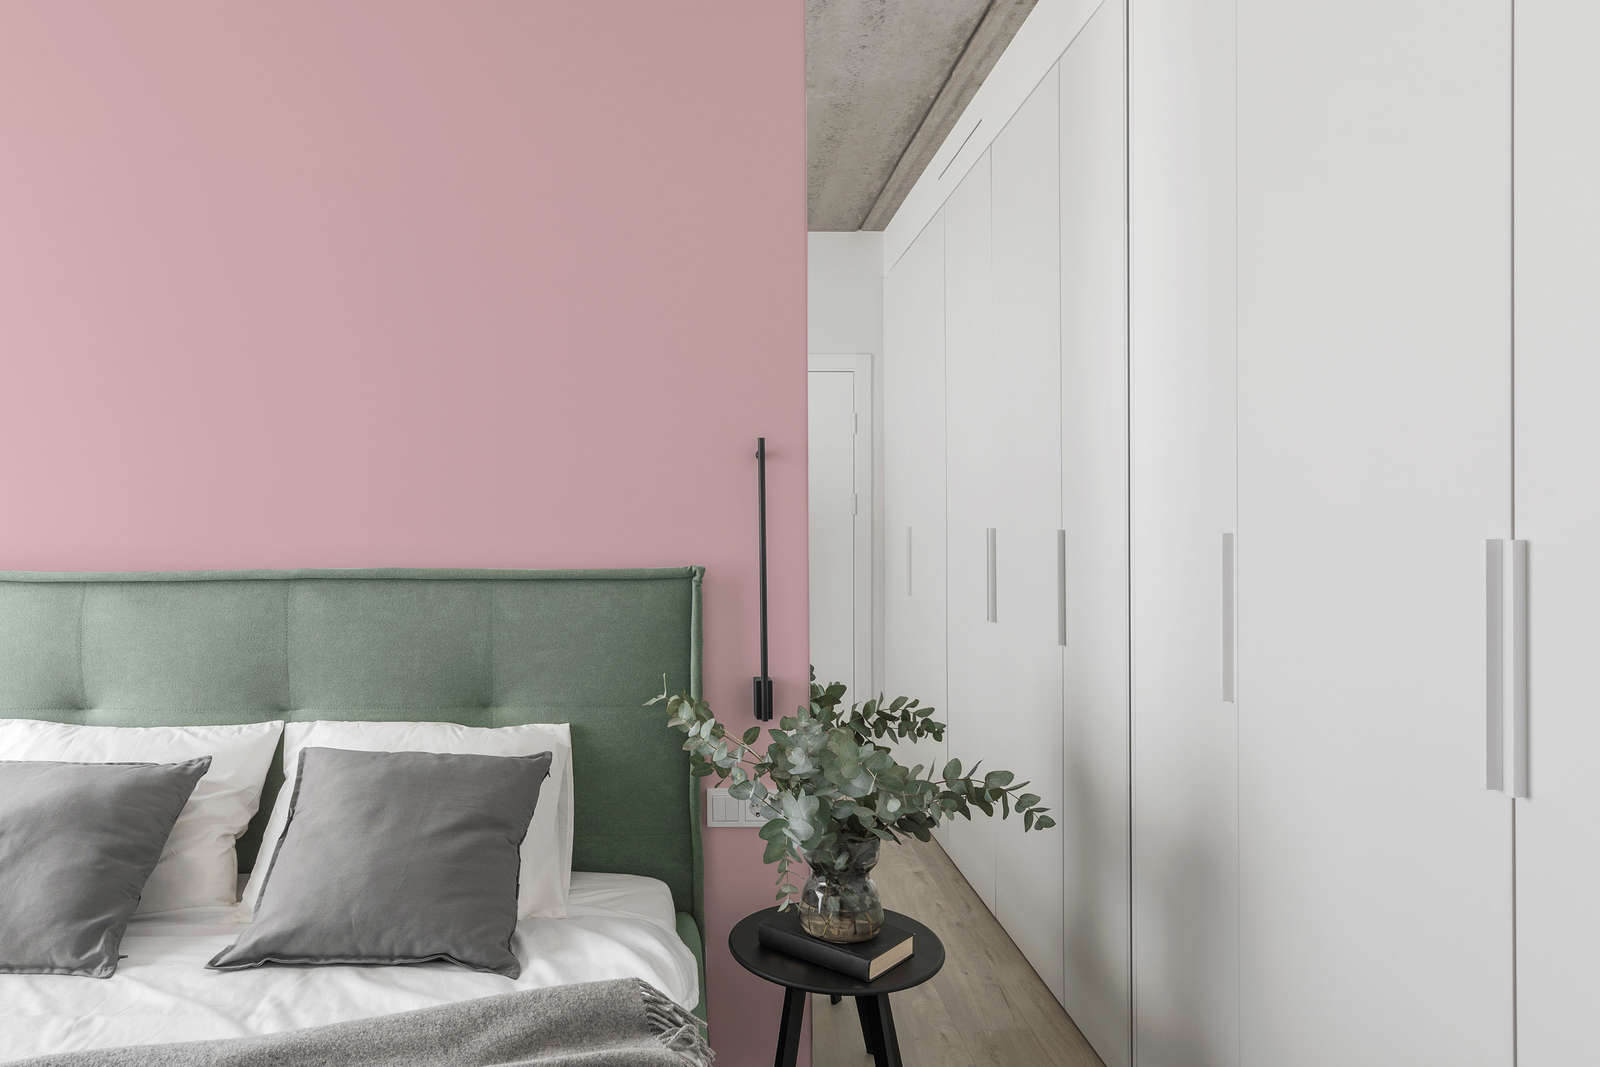             Pittura murale Premium rosa tenue »Blooming Blossom« NW1016 – 1 litri
        